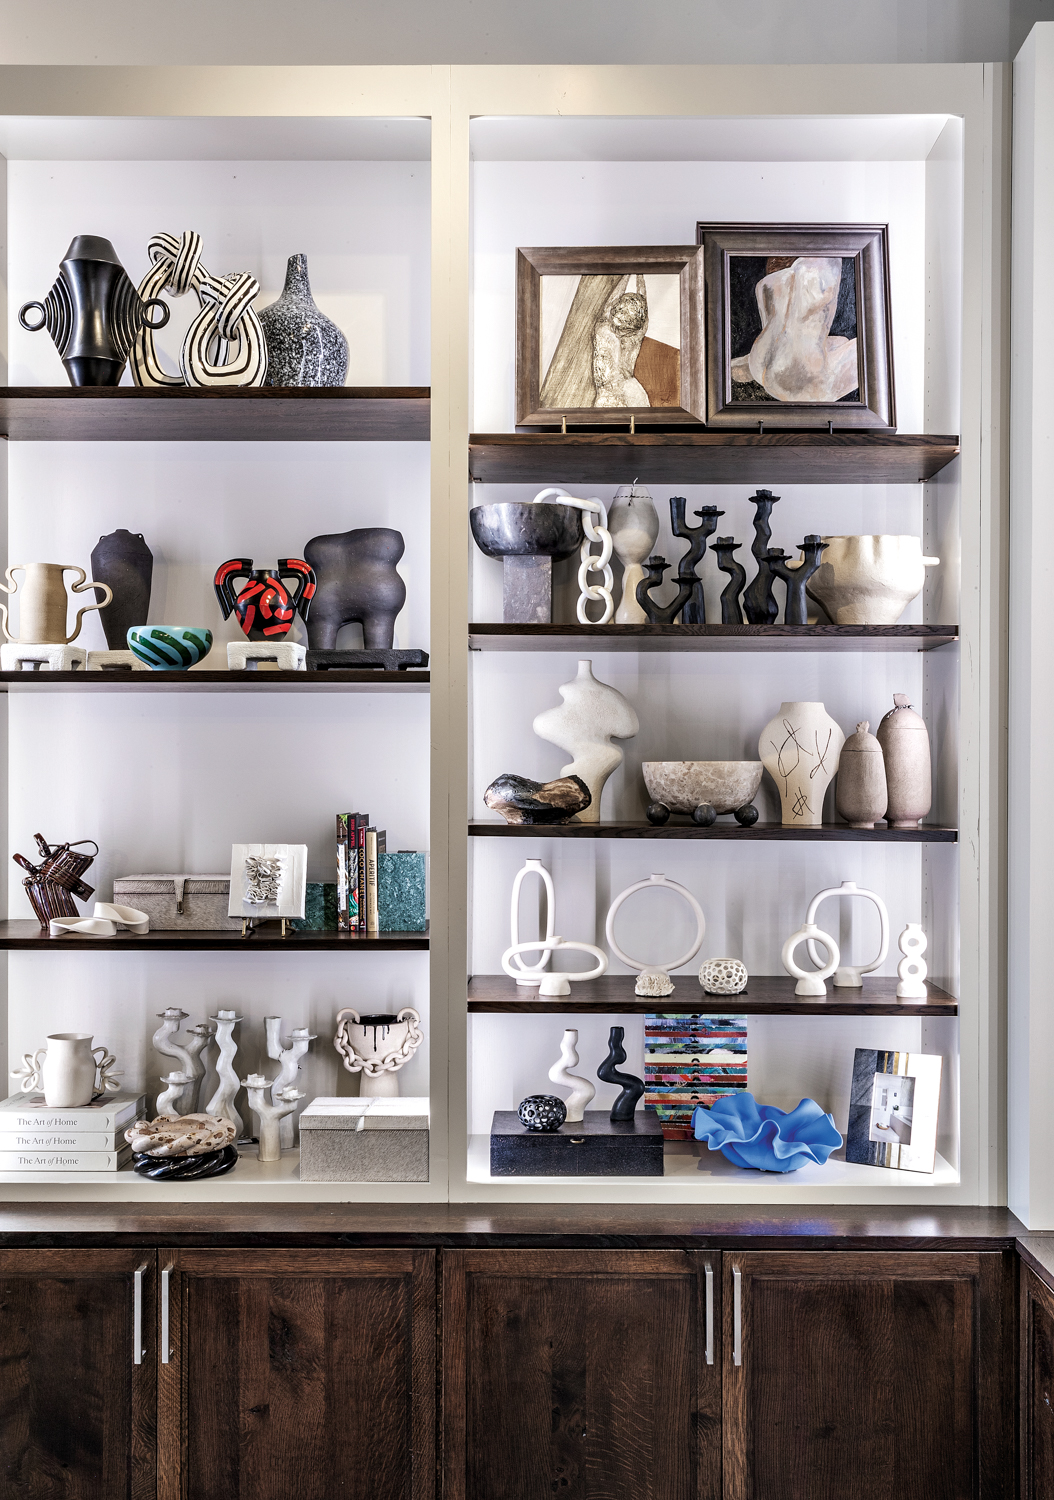 Shelves filled with black and white vessels, framed artwork and sculptures